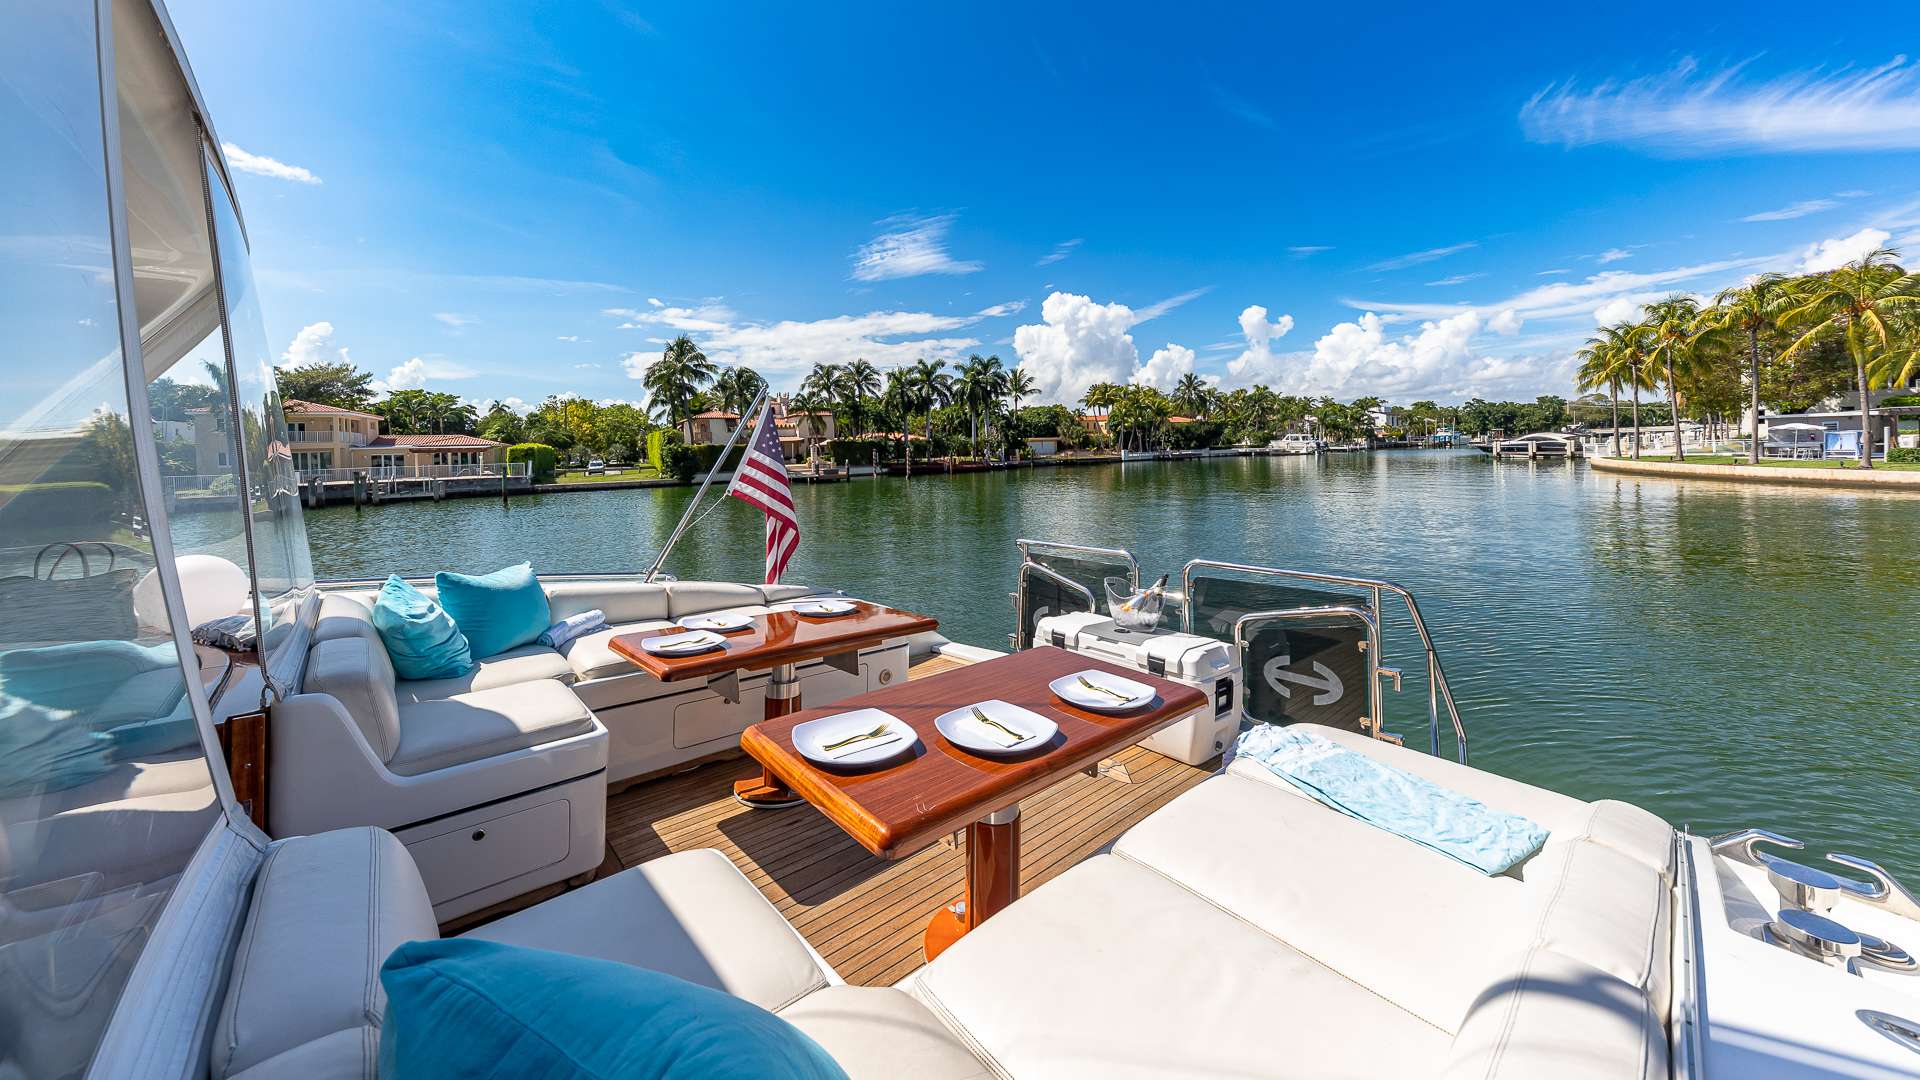 Happy - Yacht Charter USA & Boat hire in Florida & Bahamas 5